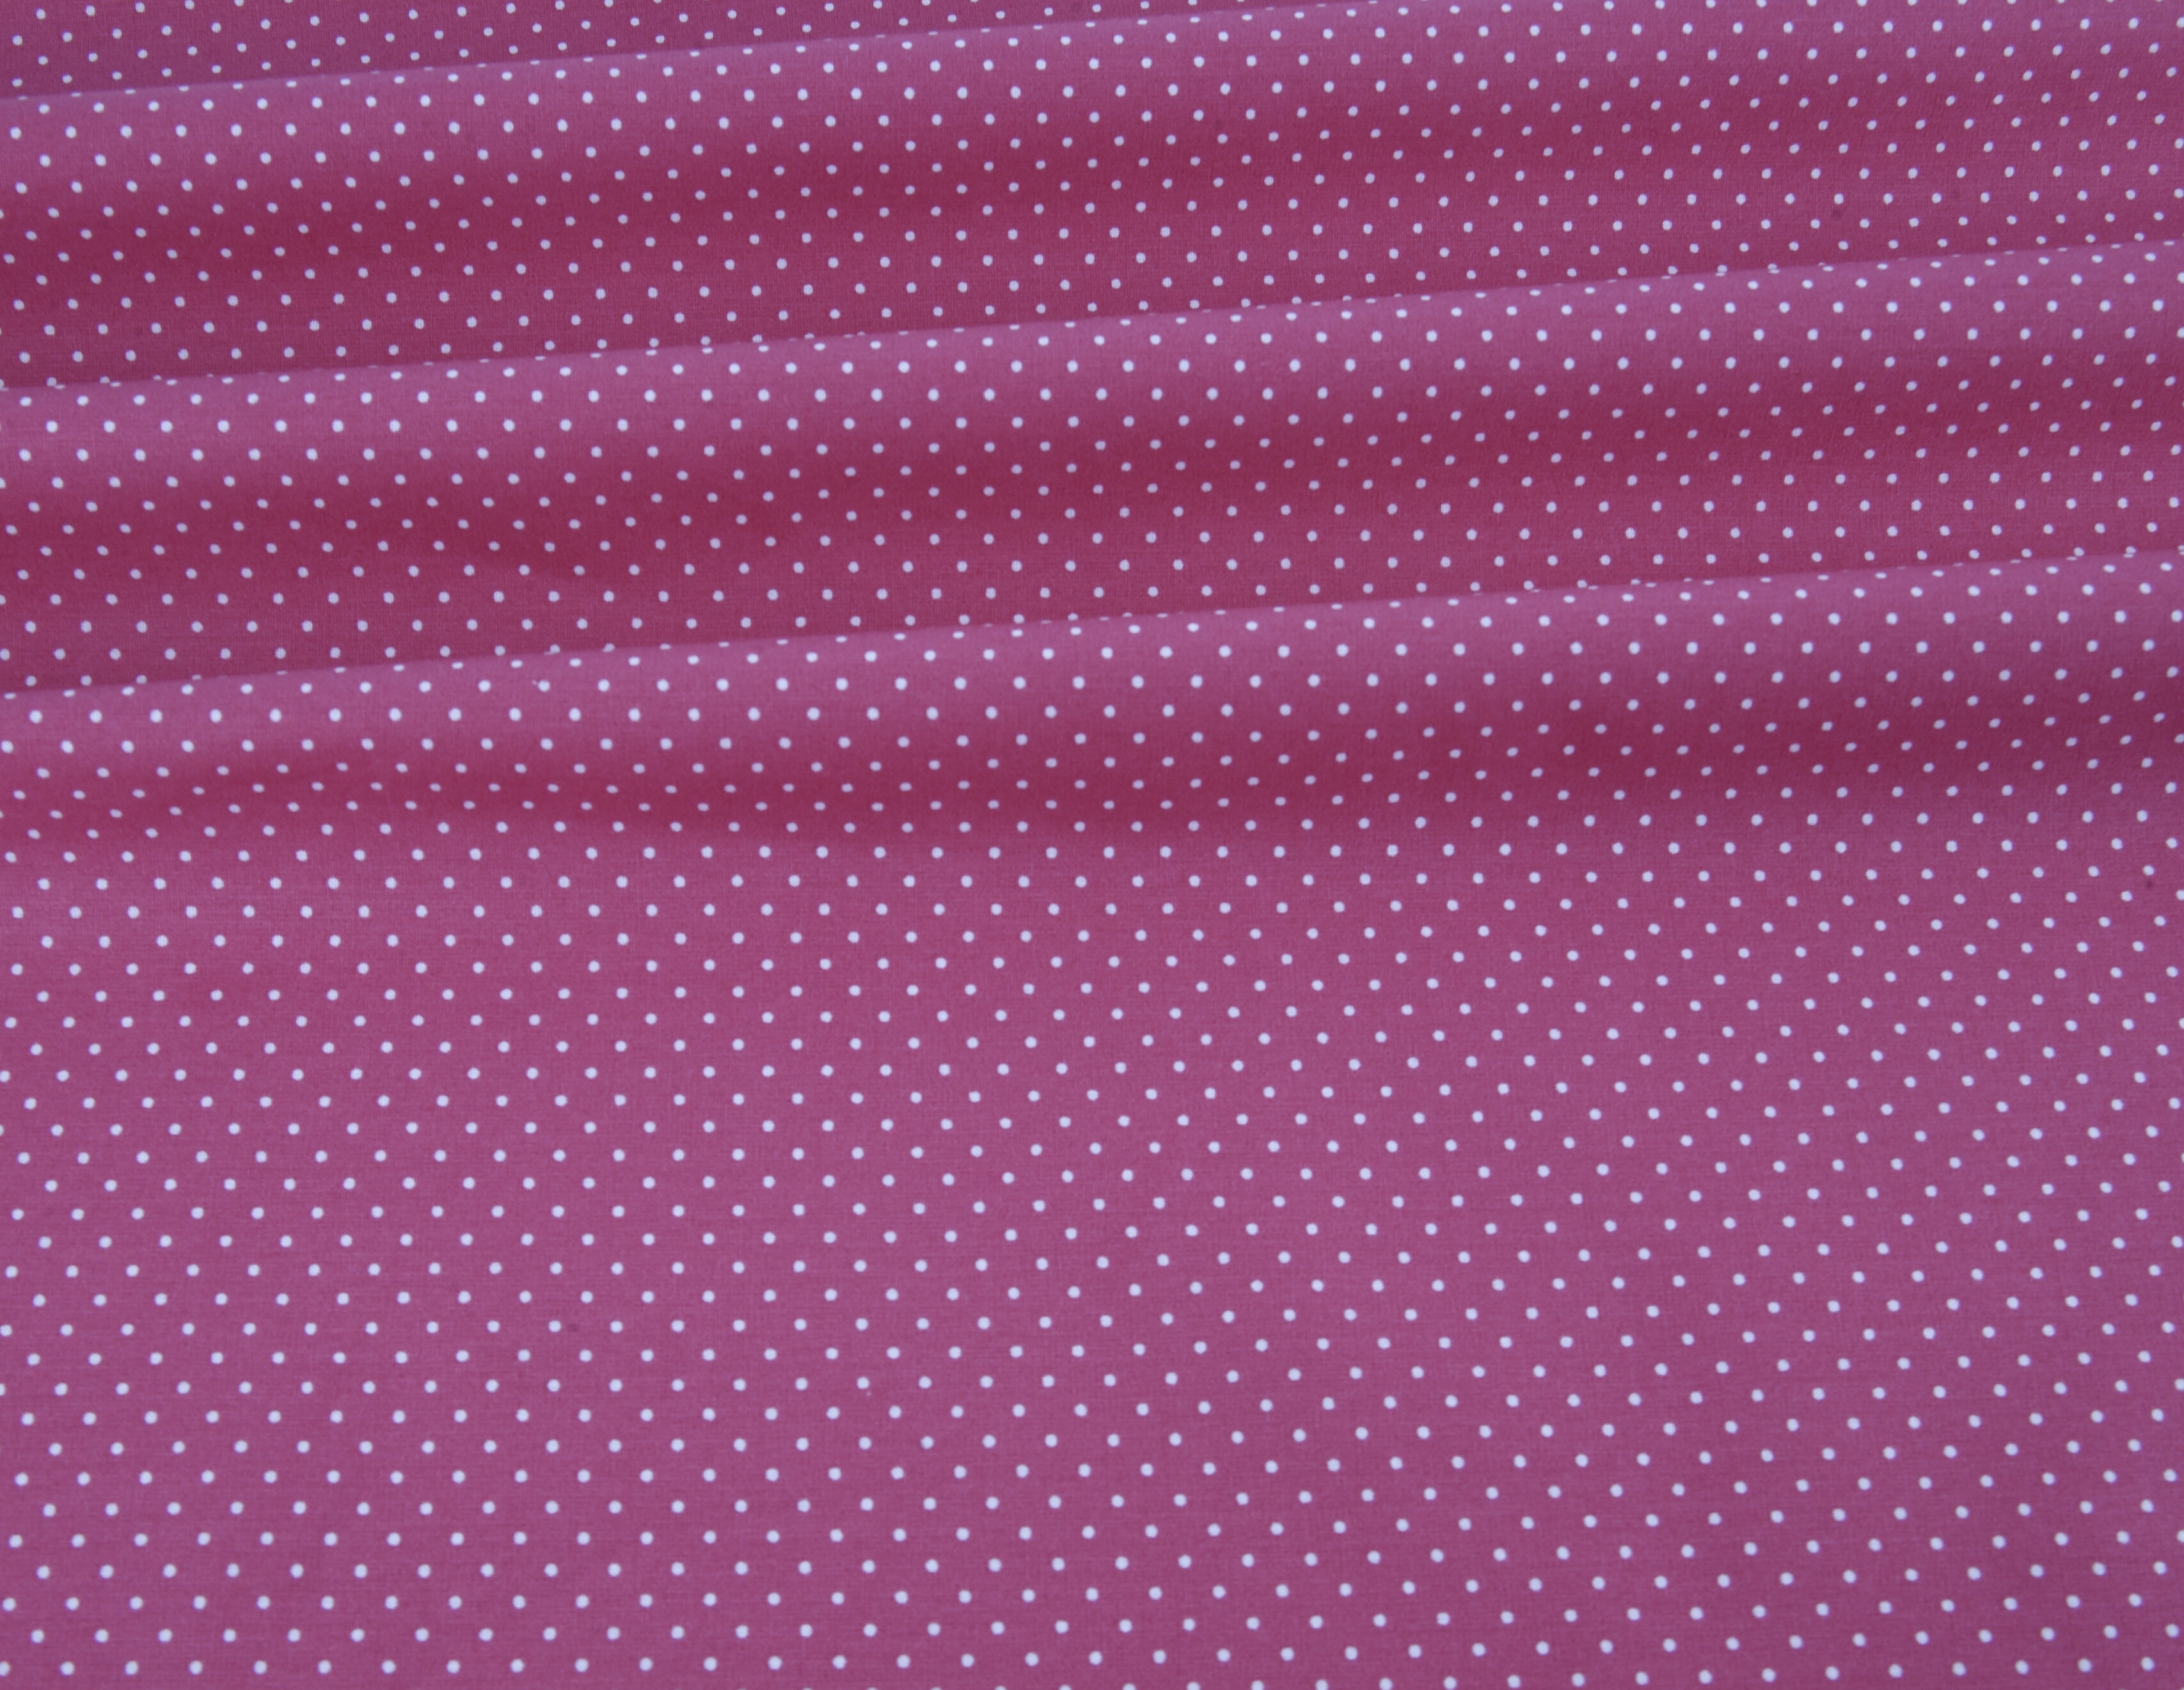 Bright Pink Pin Spot Cotton